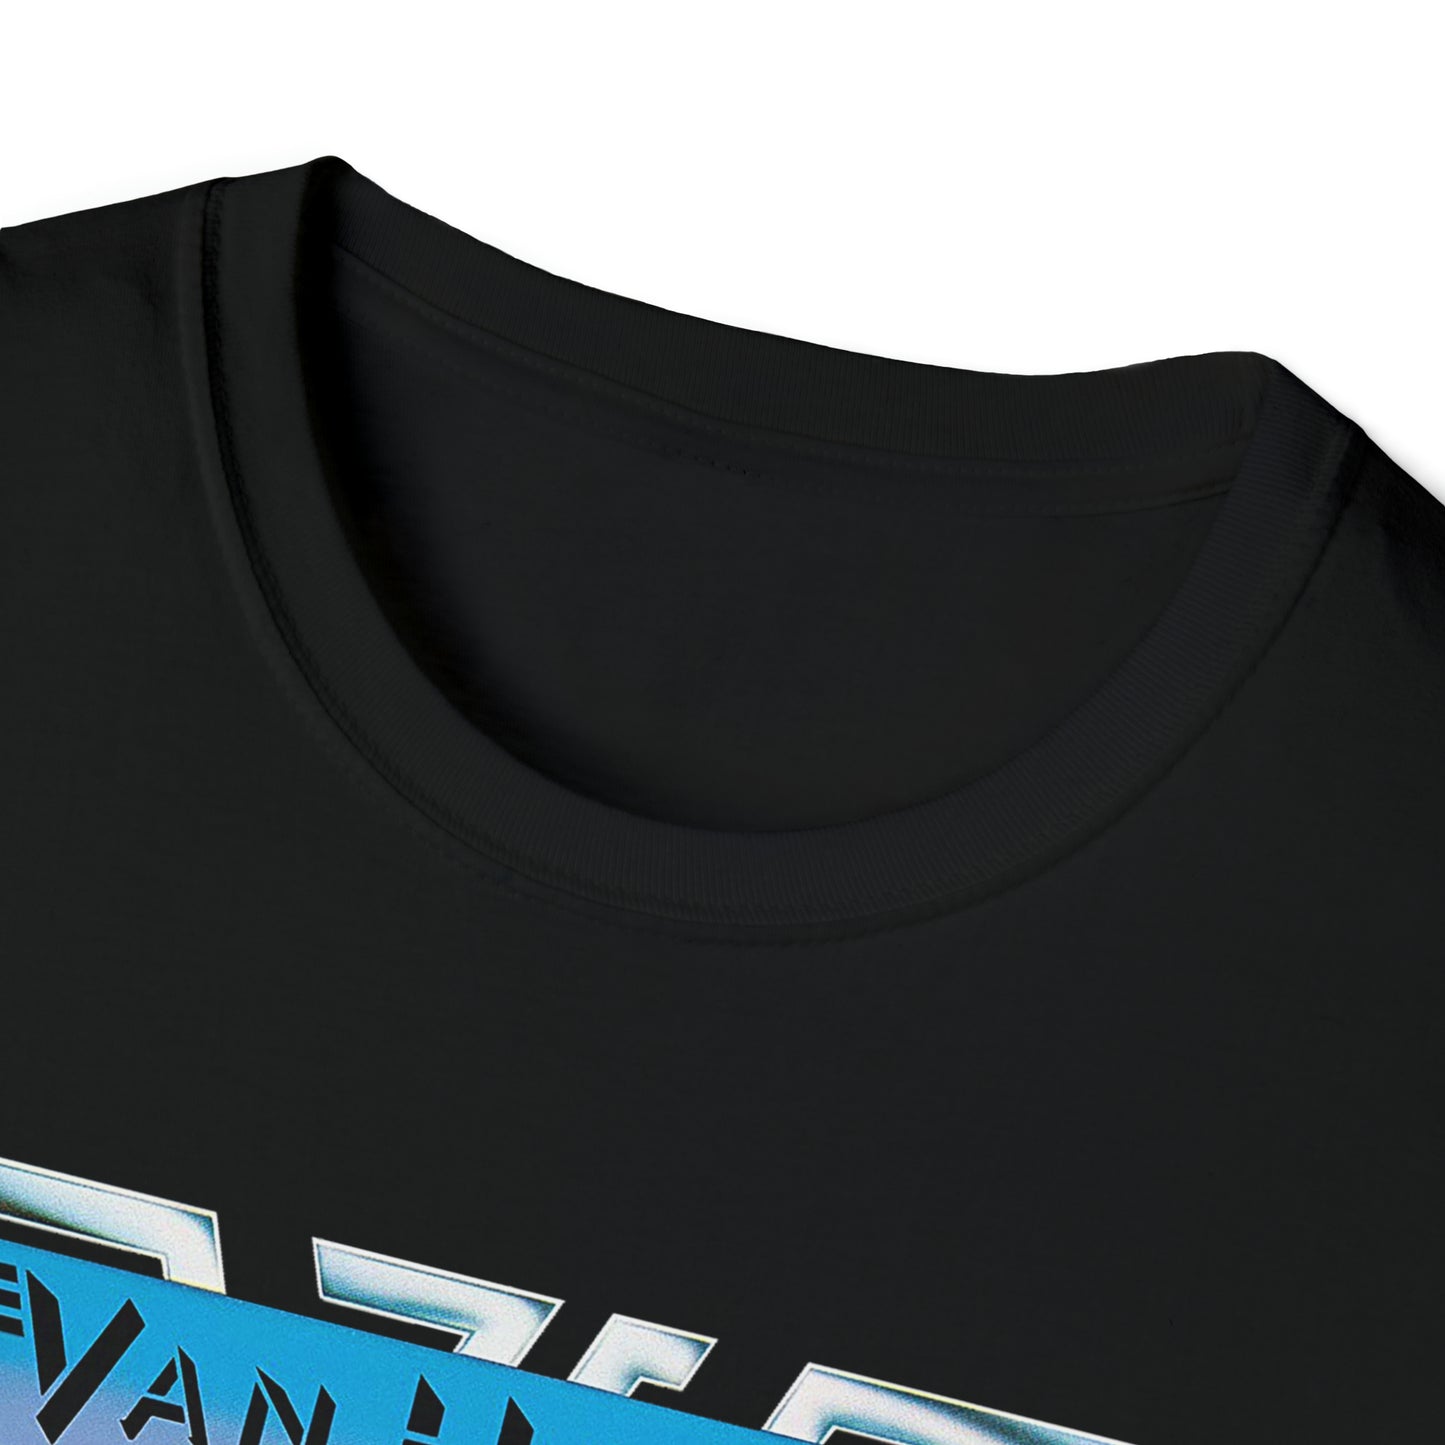 Van Halen 1978 Logo T Shirt